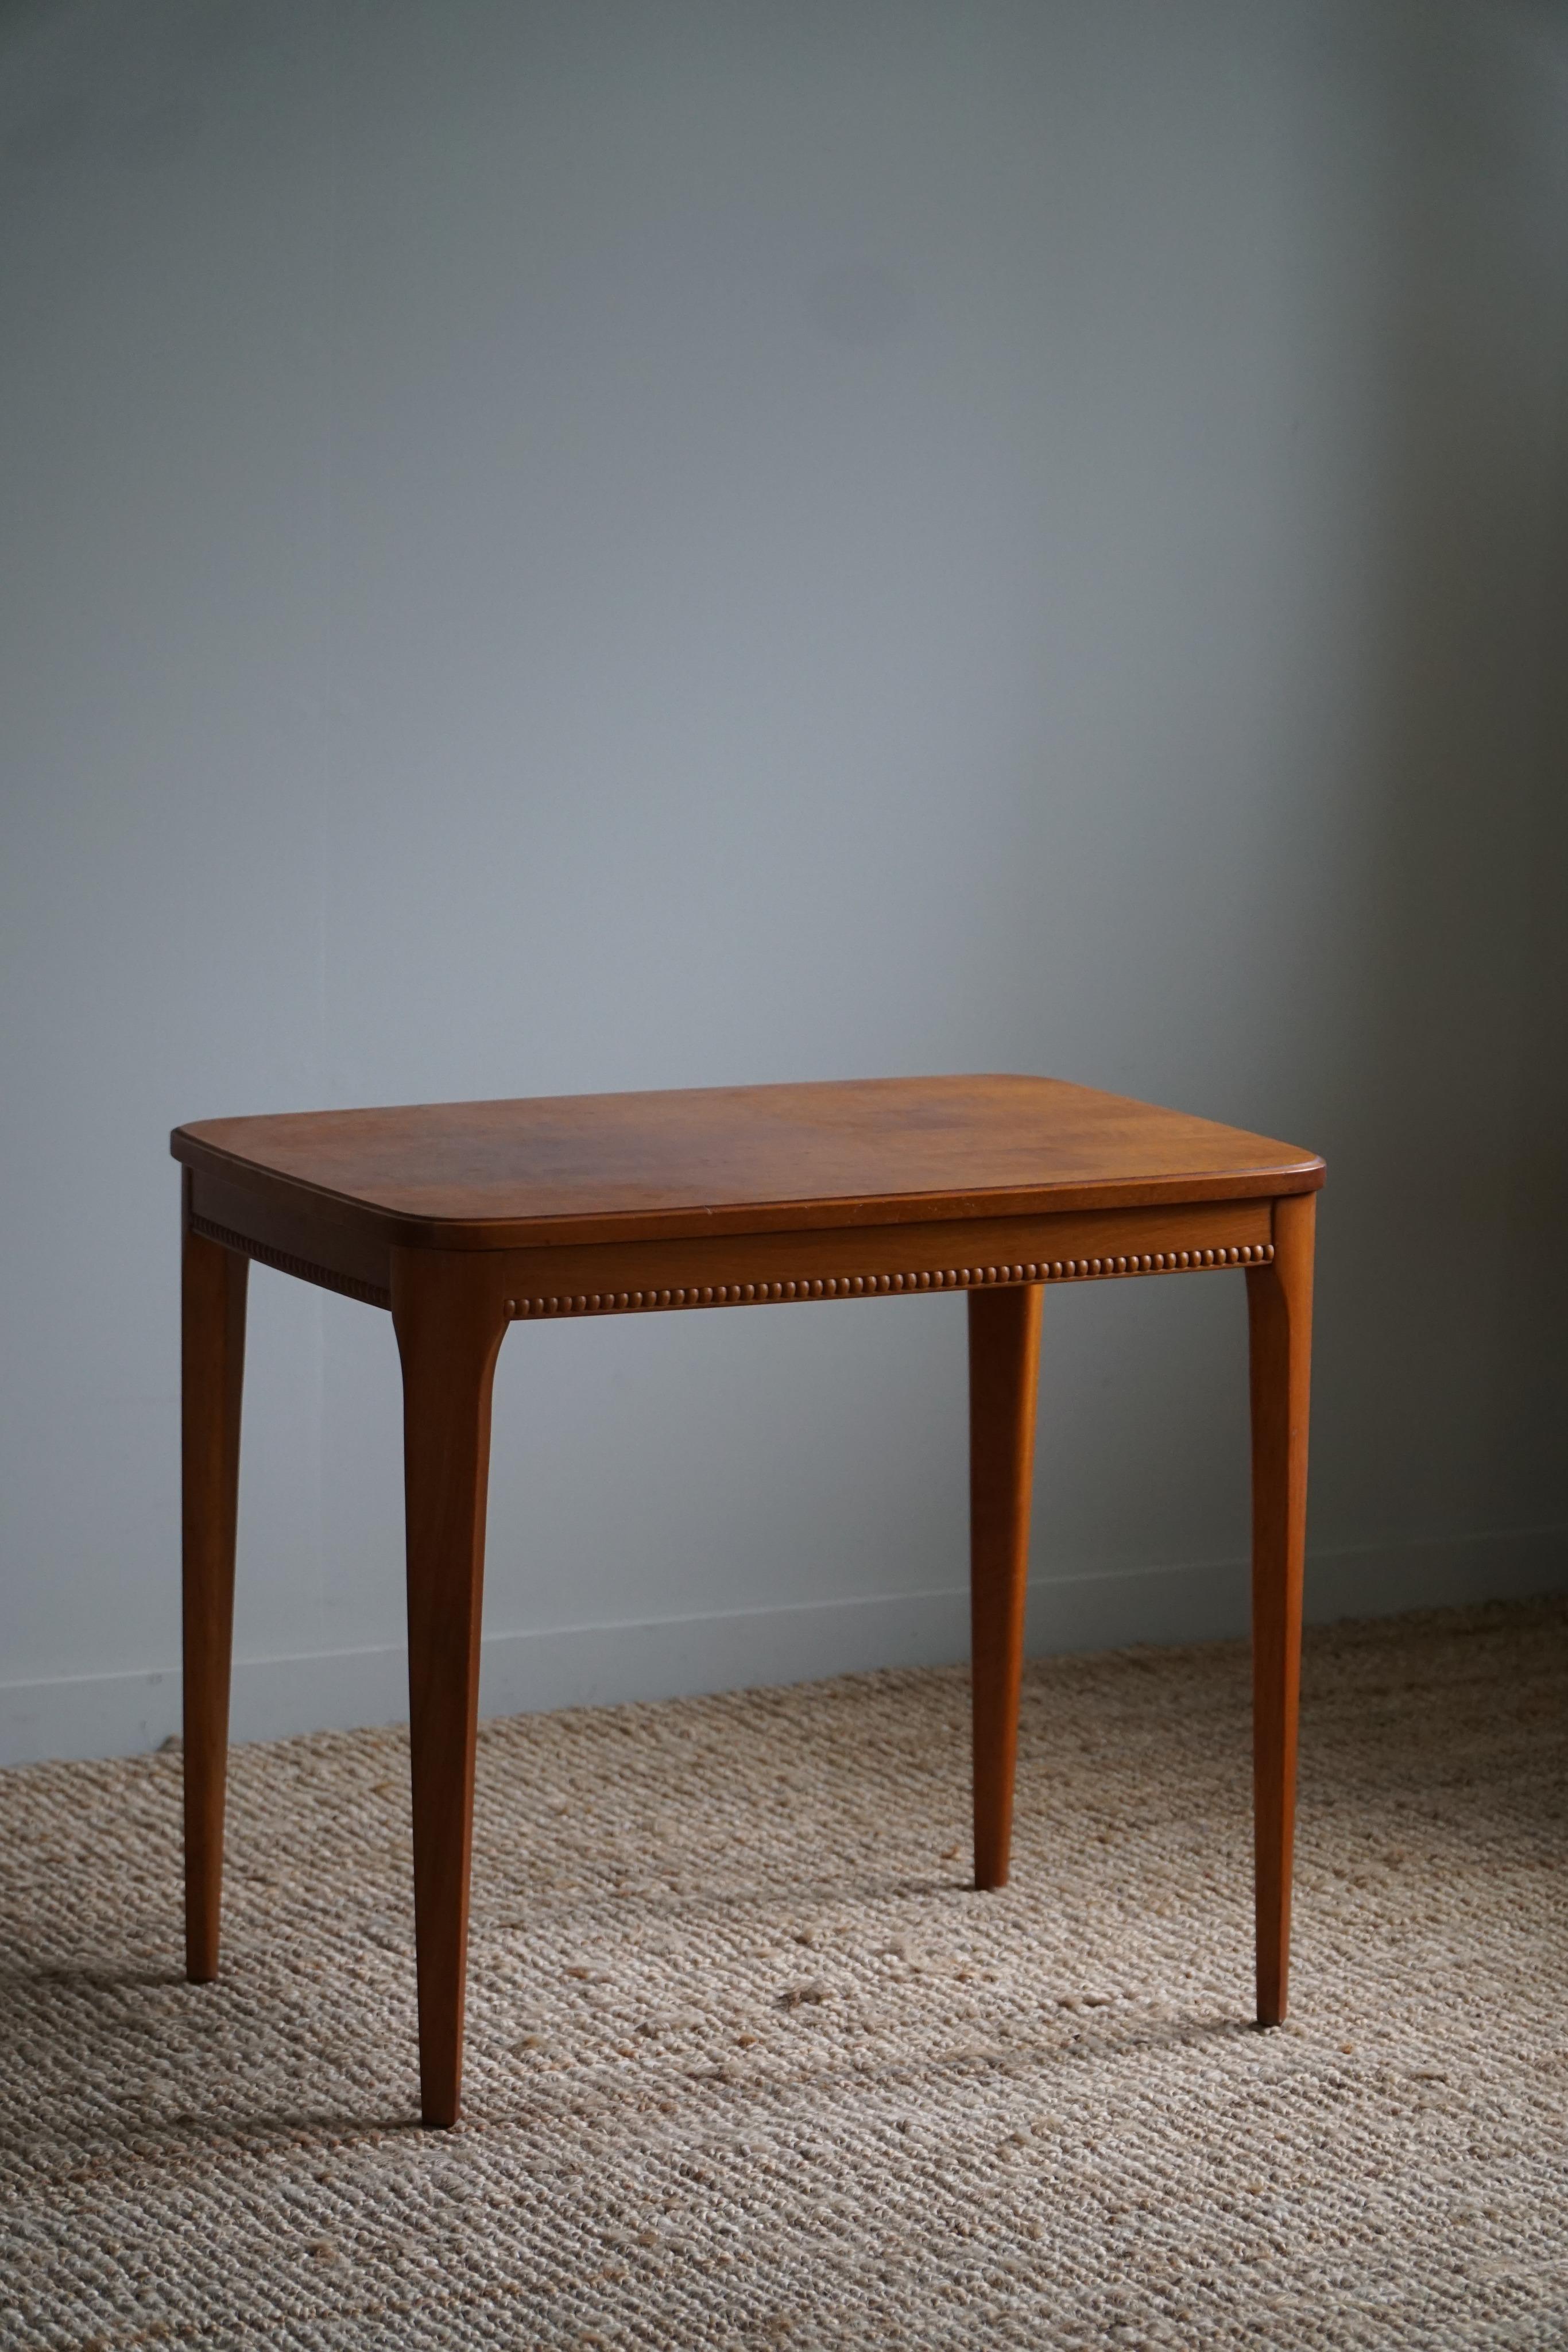 Side Table in Teak, Danish Mid Century Modern, 1950s  For Sale 6